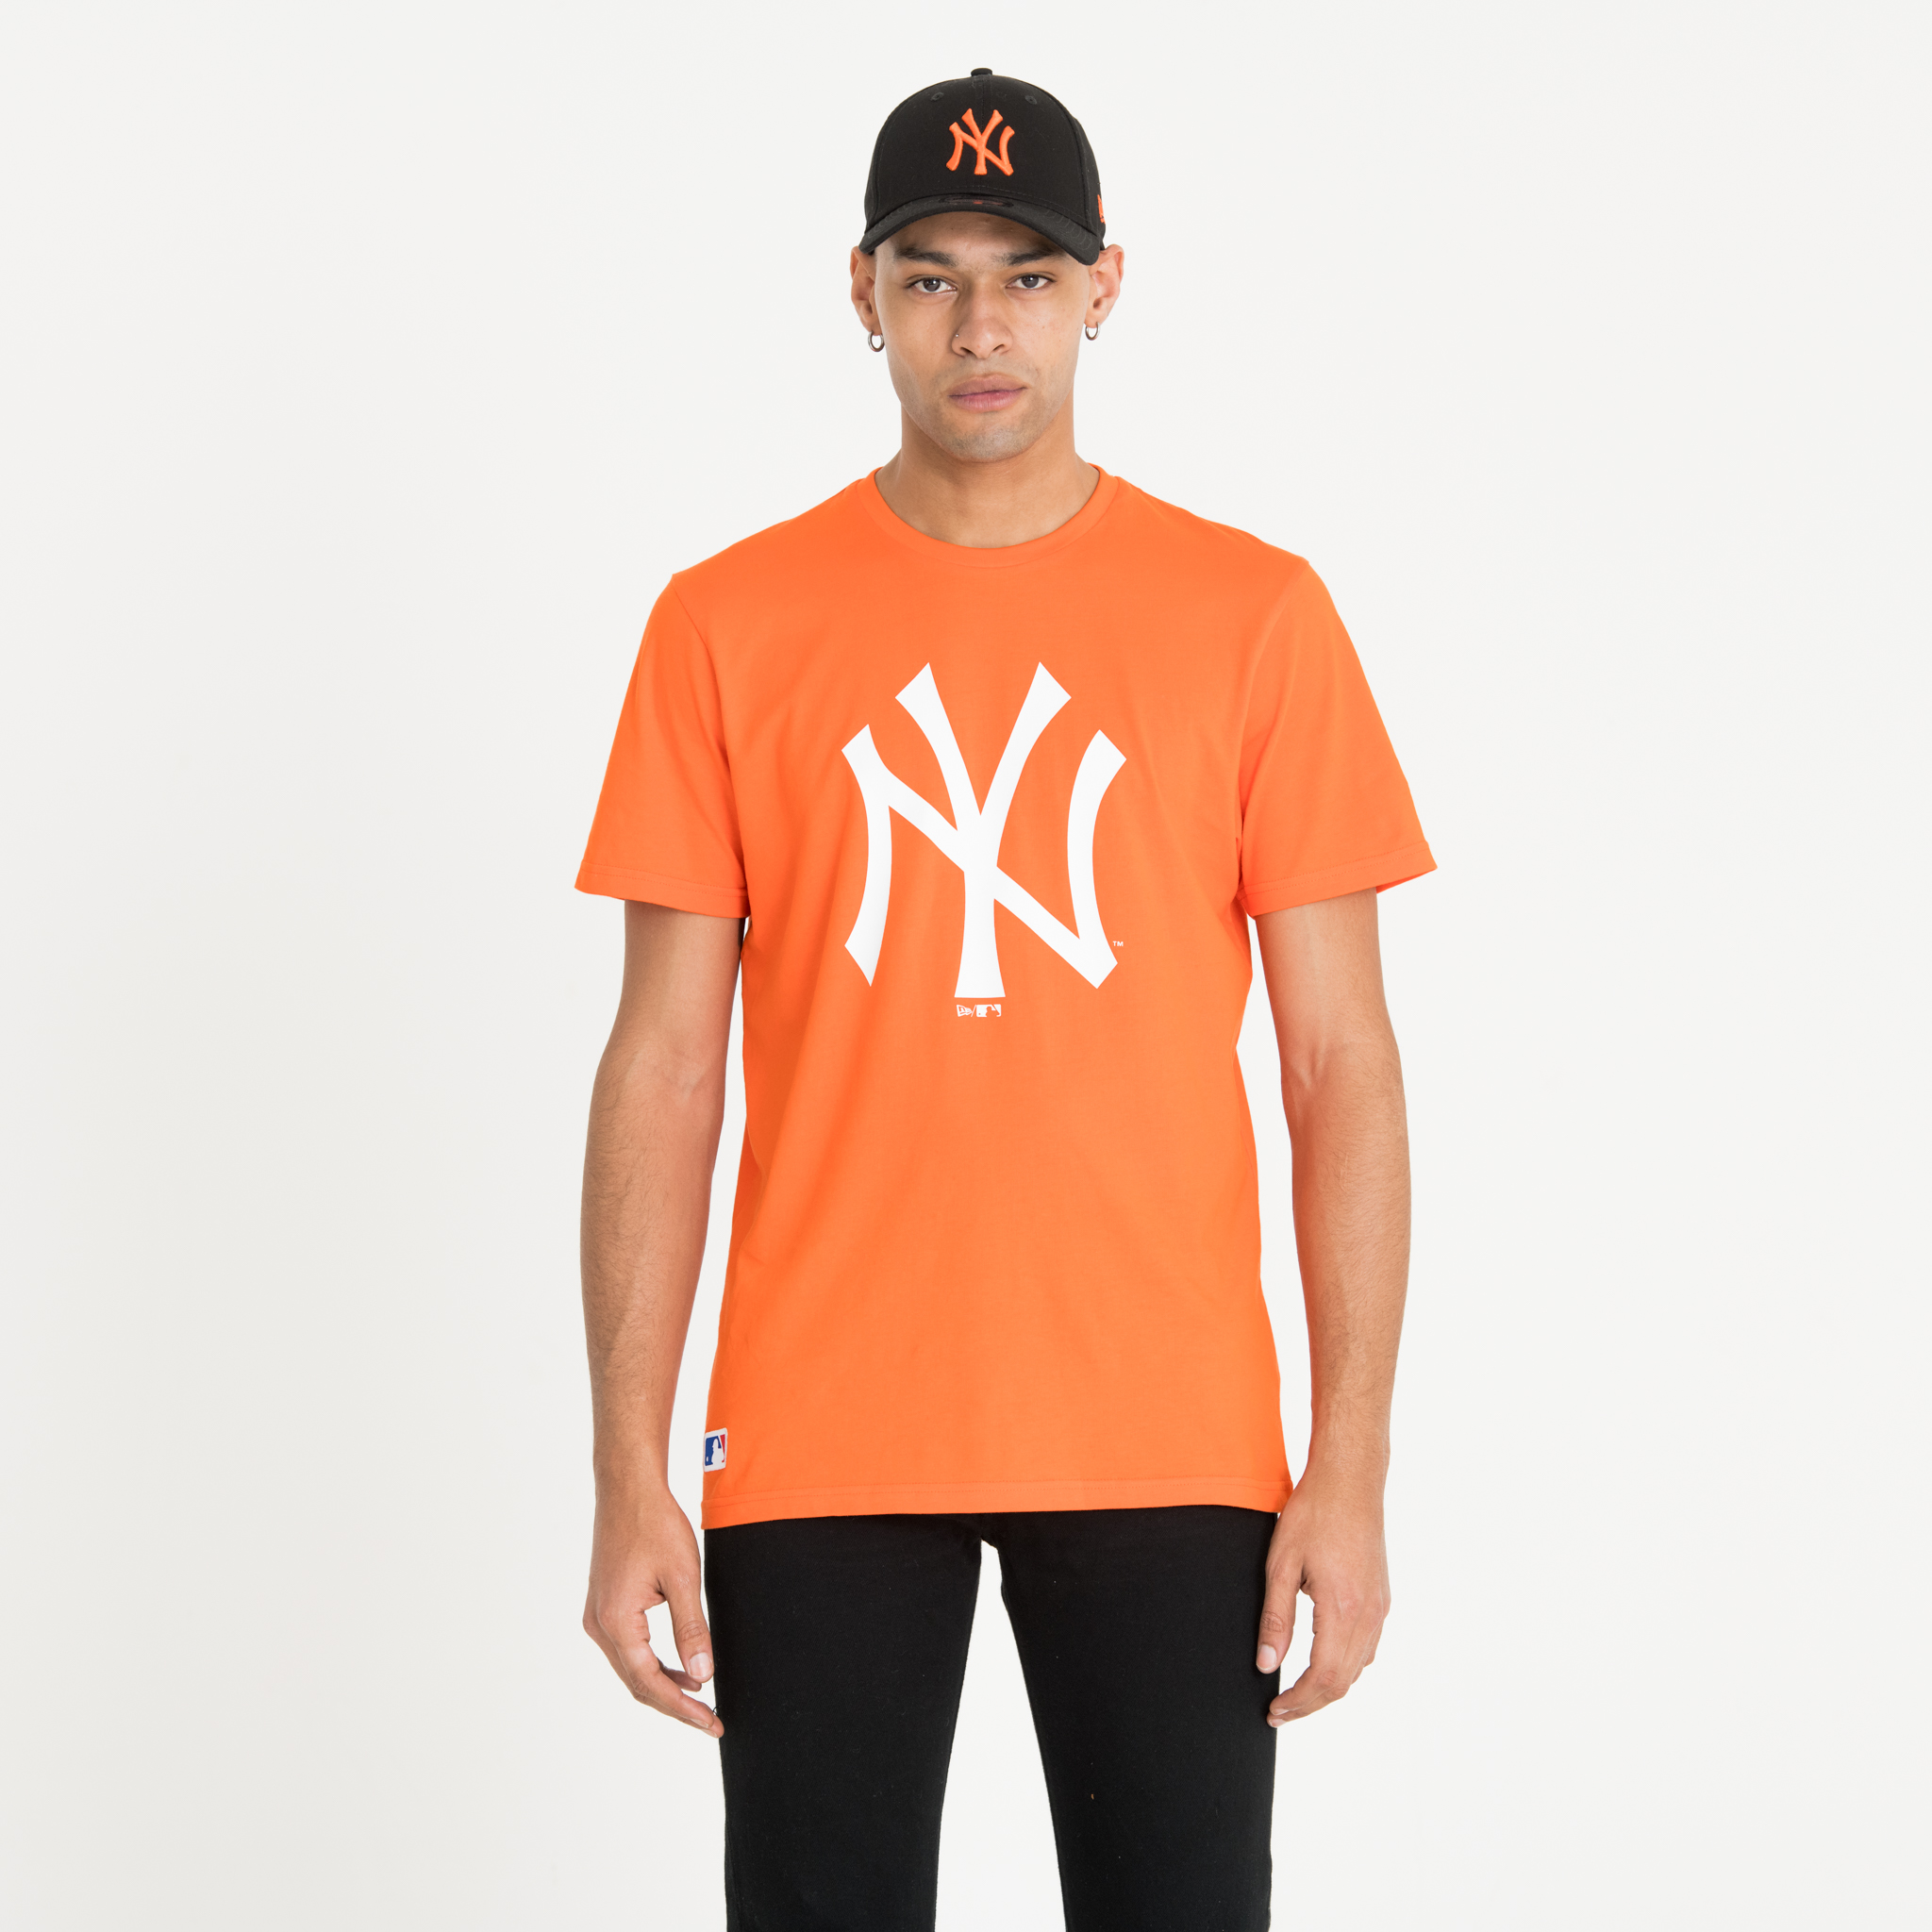 New York Yankees Orange Tee